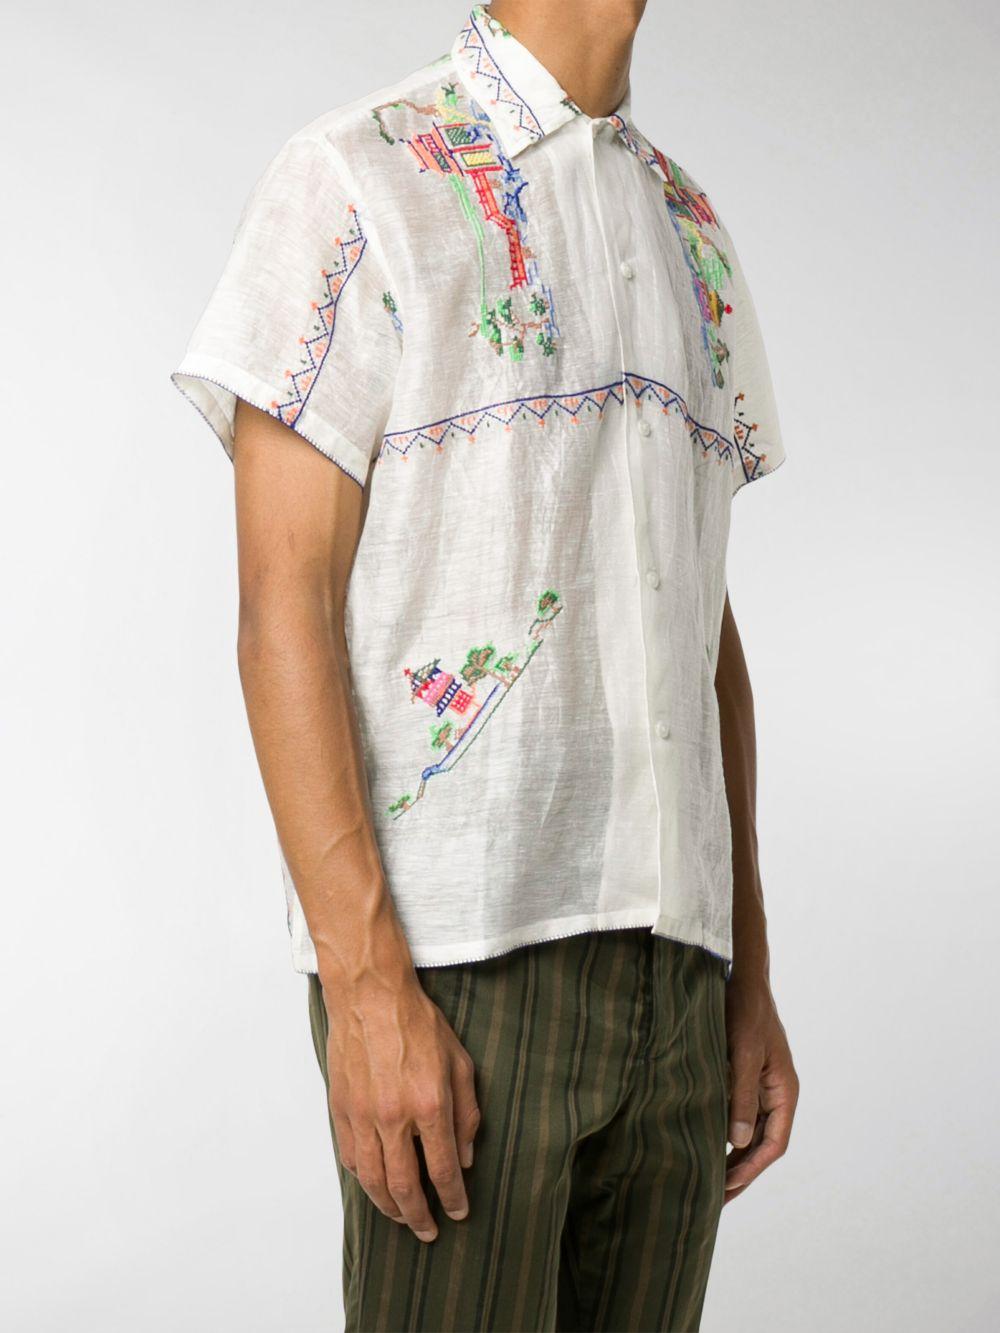 Bode Silk Embroidered Short-sleeved Shirt in White for Men - Lyst